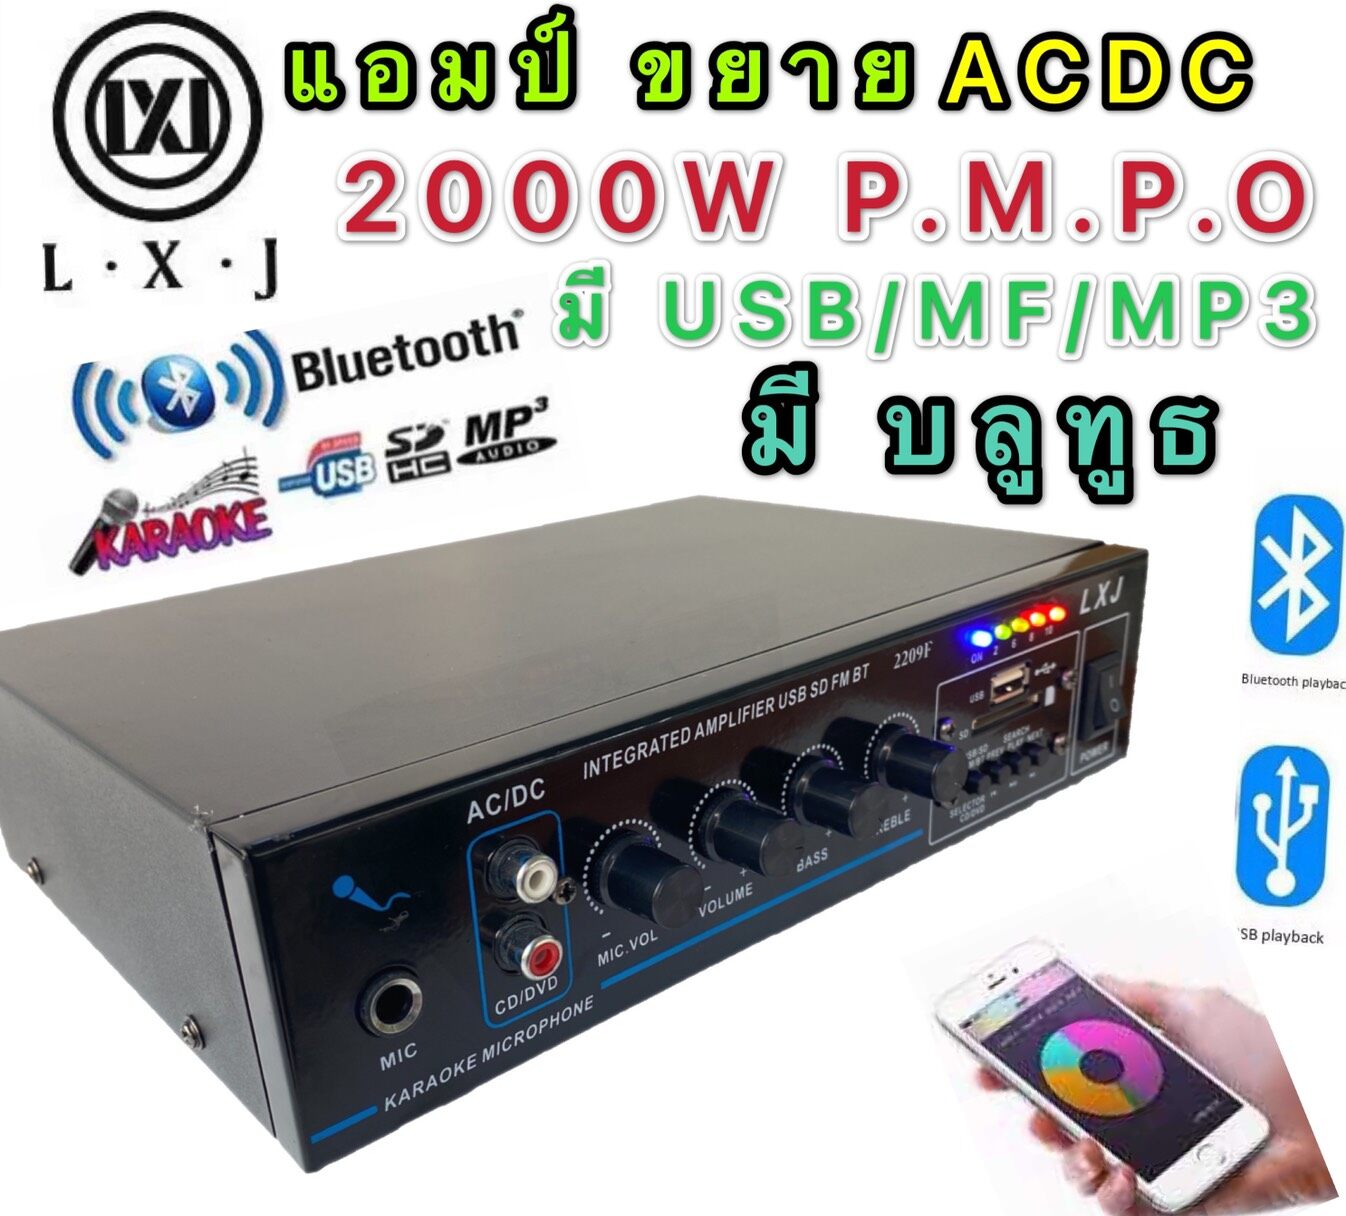 LXJ เครื่องขยายเสียง AC/DCAV-2209Fมี BLUETาOOTH เล่น USB MP3ใช้ไฟได้ 2ระบบ DC12V / AC220V กำลังวัตต์ 2000w P.M.P.Oมี USB+BT+SD+FM SDCARD รถโฆษณ